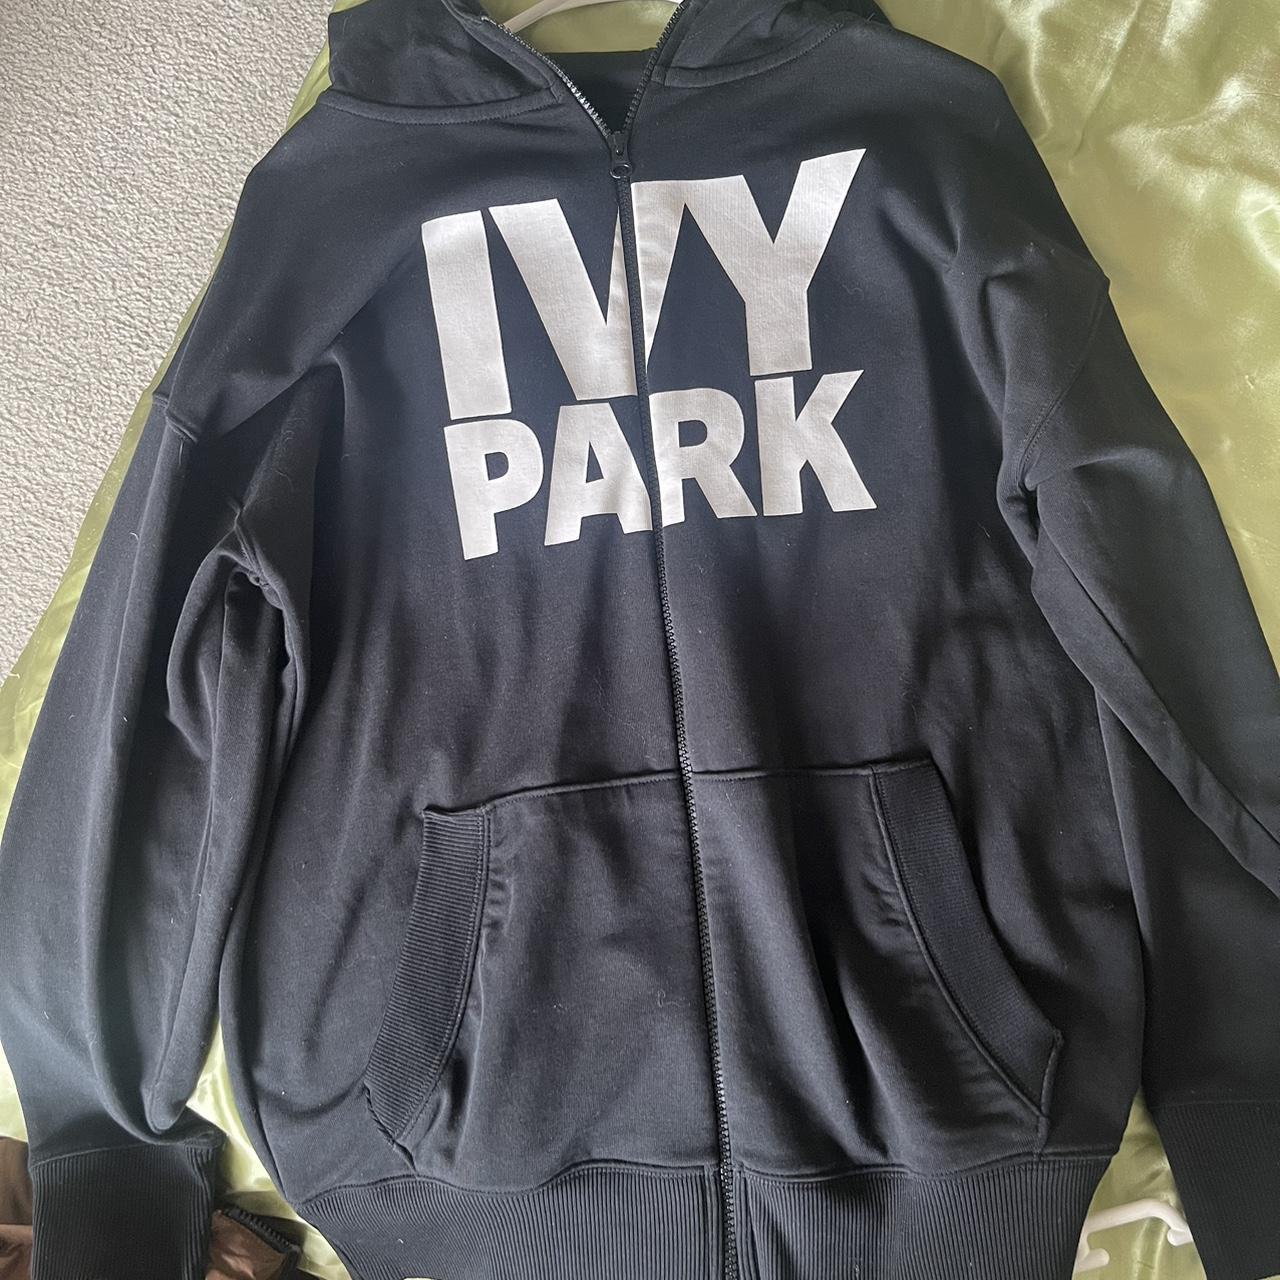 Black Ivy Park jacket in small (runs oversized).... - Depop